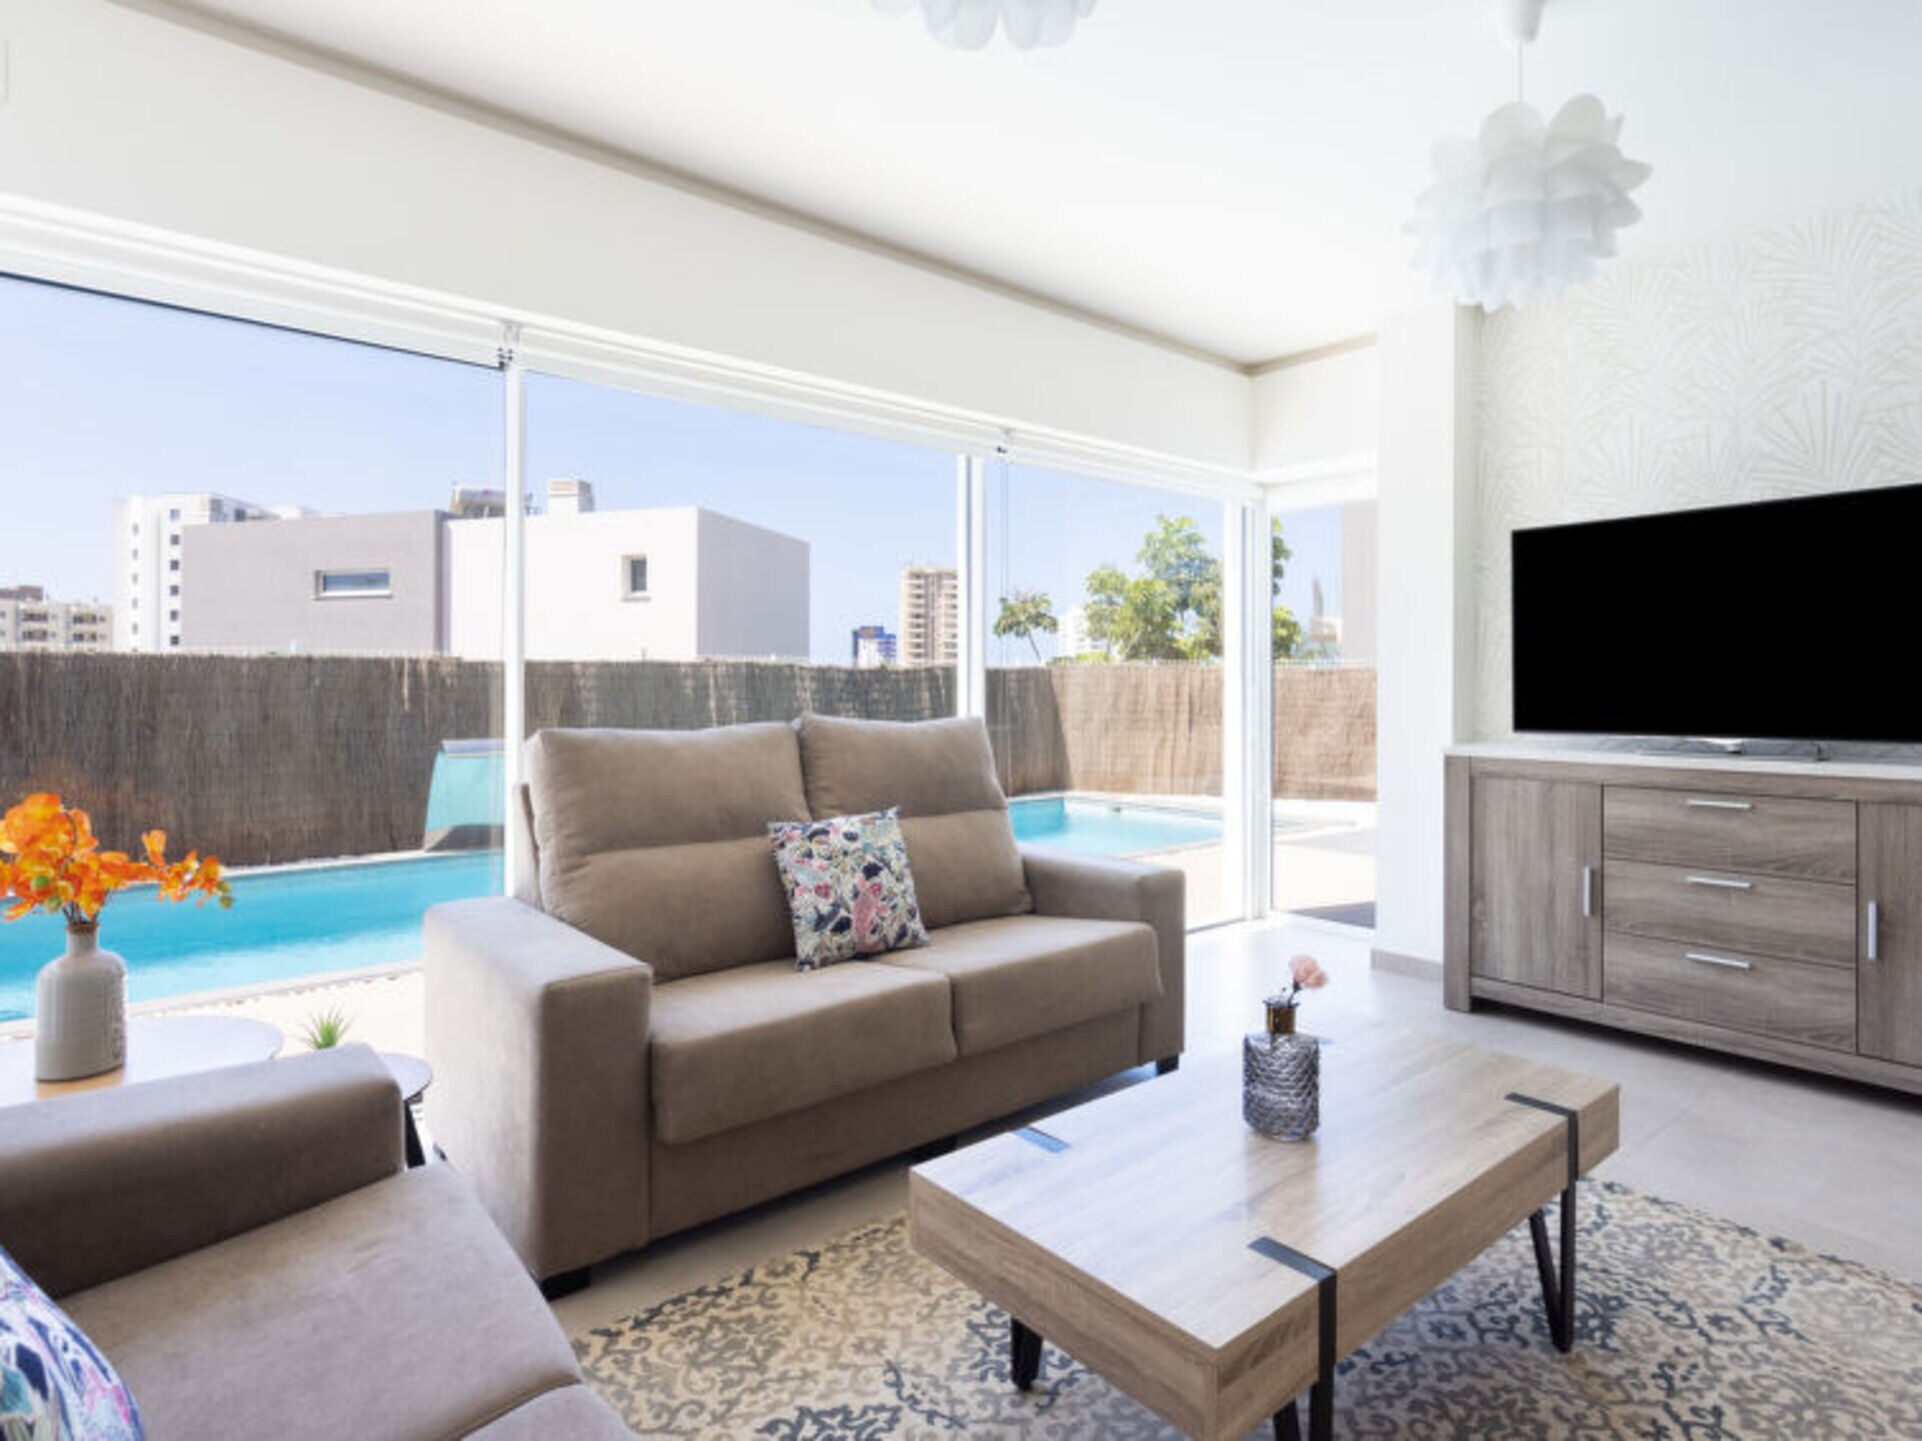 Property Image 2 - Rent Your Own Luxury Villa with 3 Bedrooms, Tenerife Villa 1010